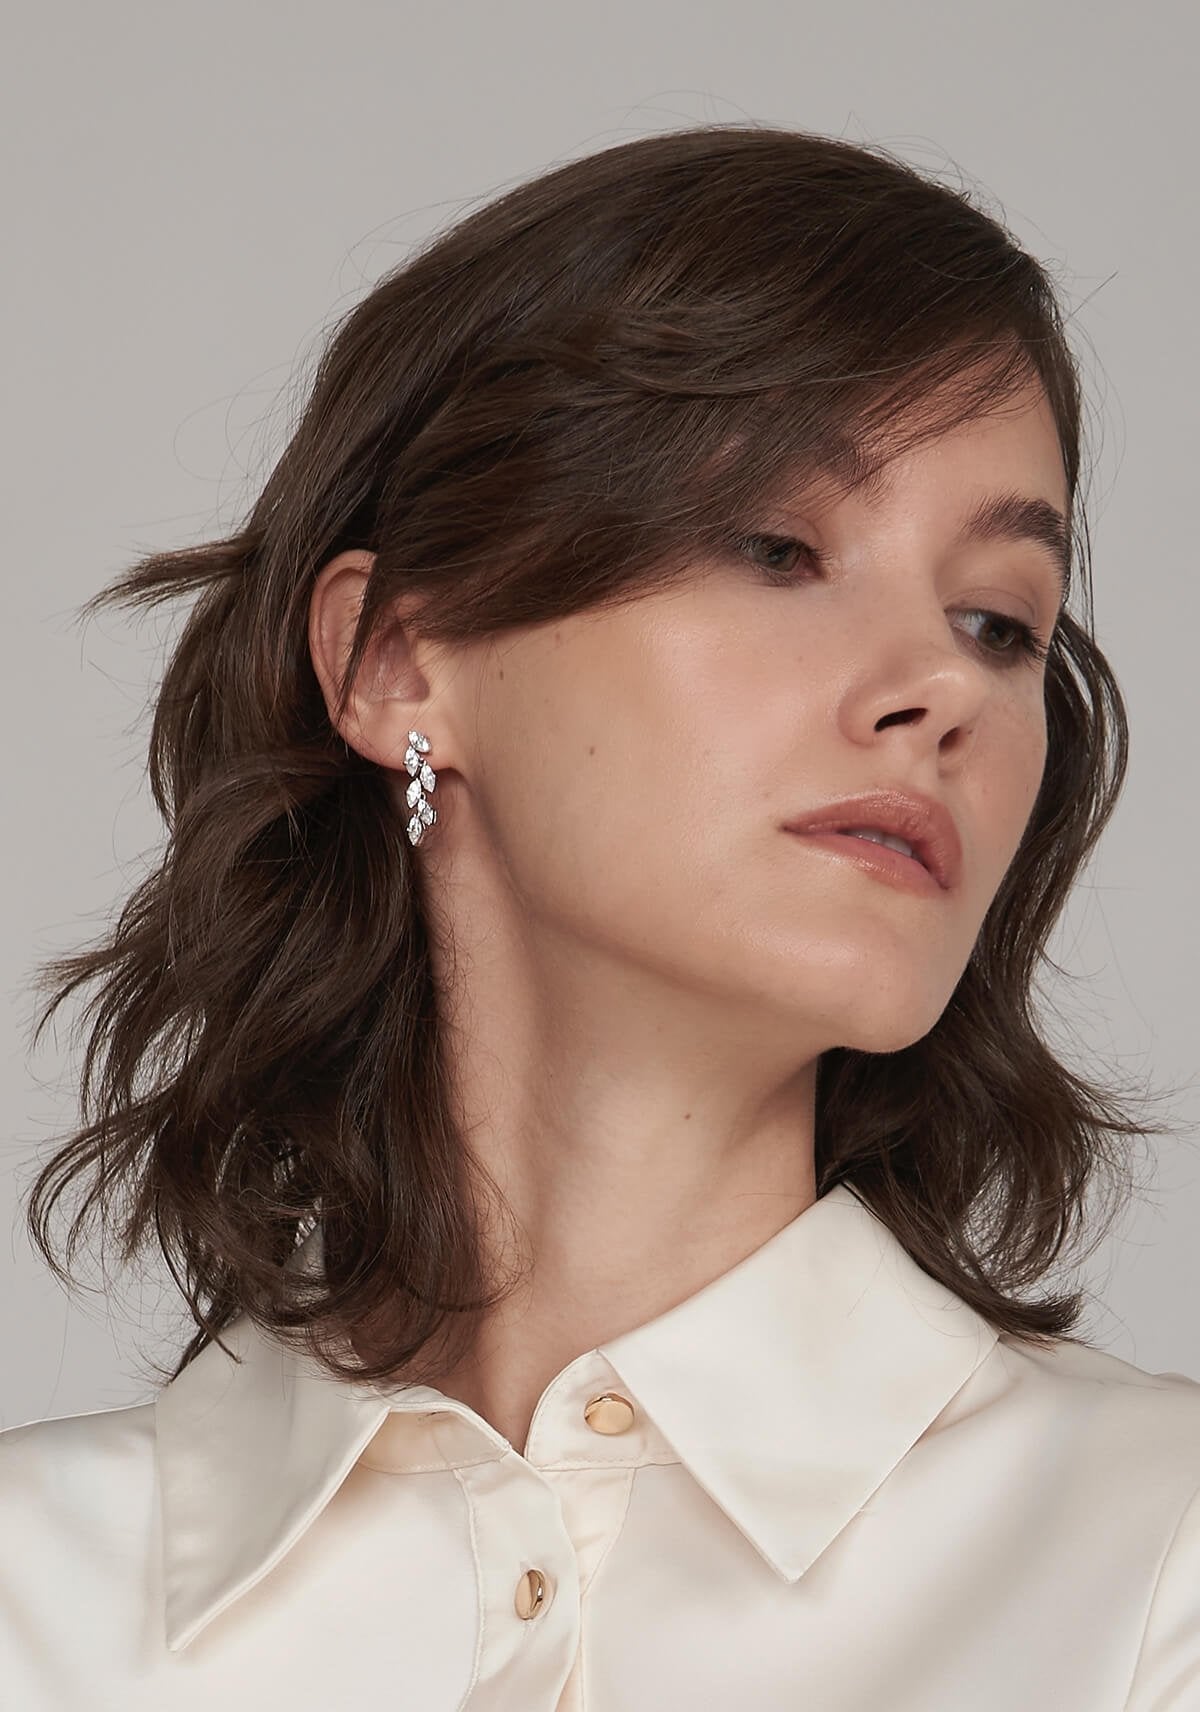 Marquise Diamond Leaf Earrings